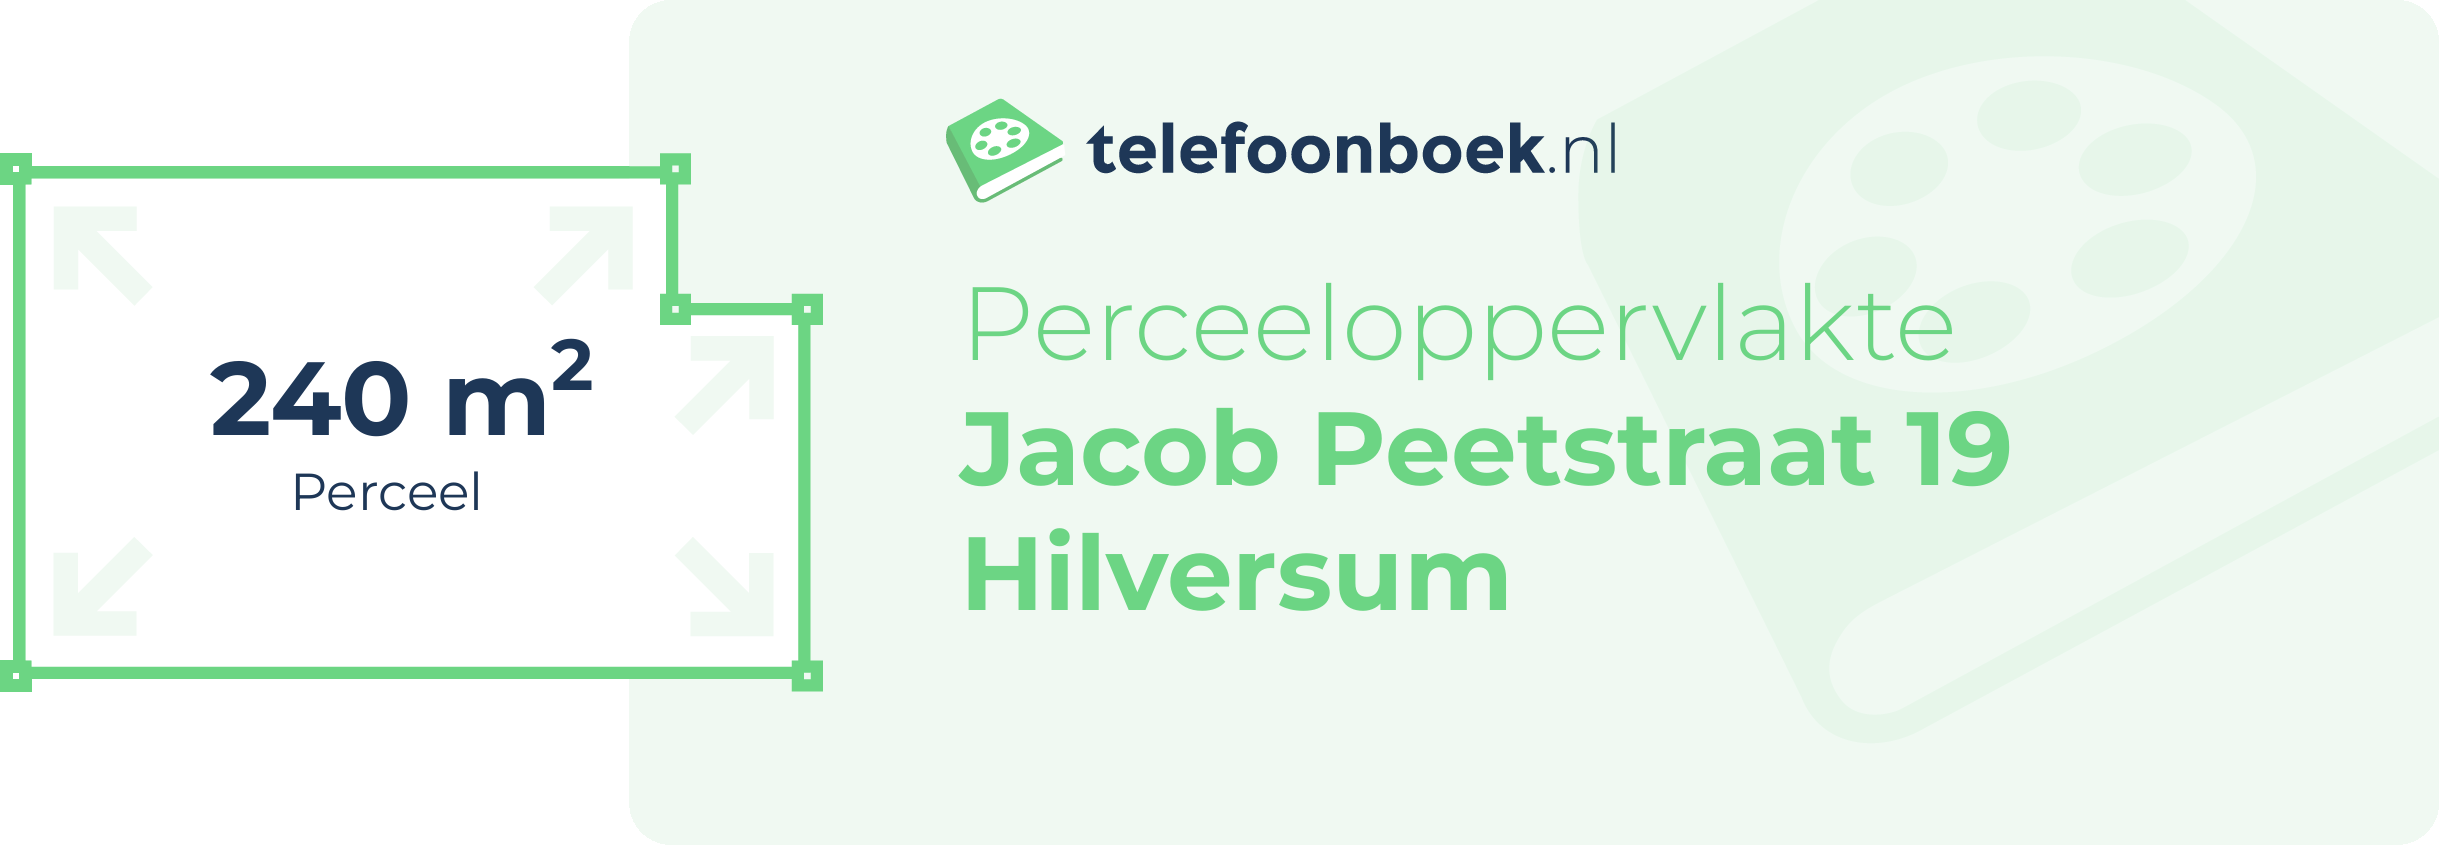 Perceeloppervlakte Jacob Peetstraat 19 Hilversum